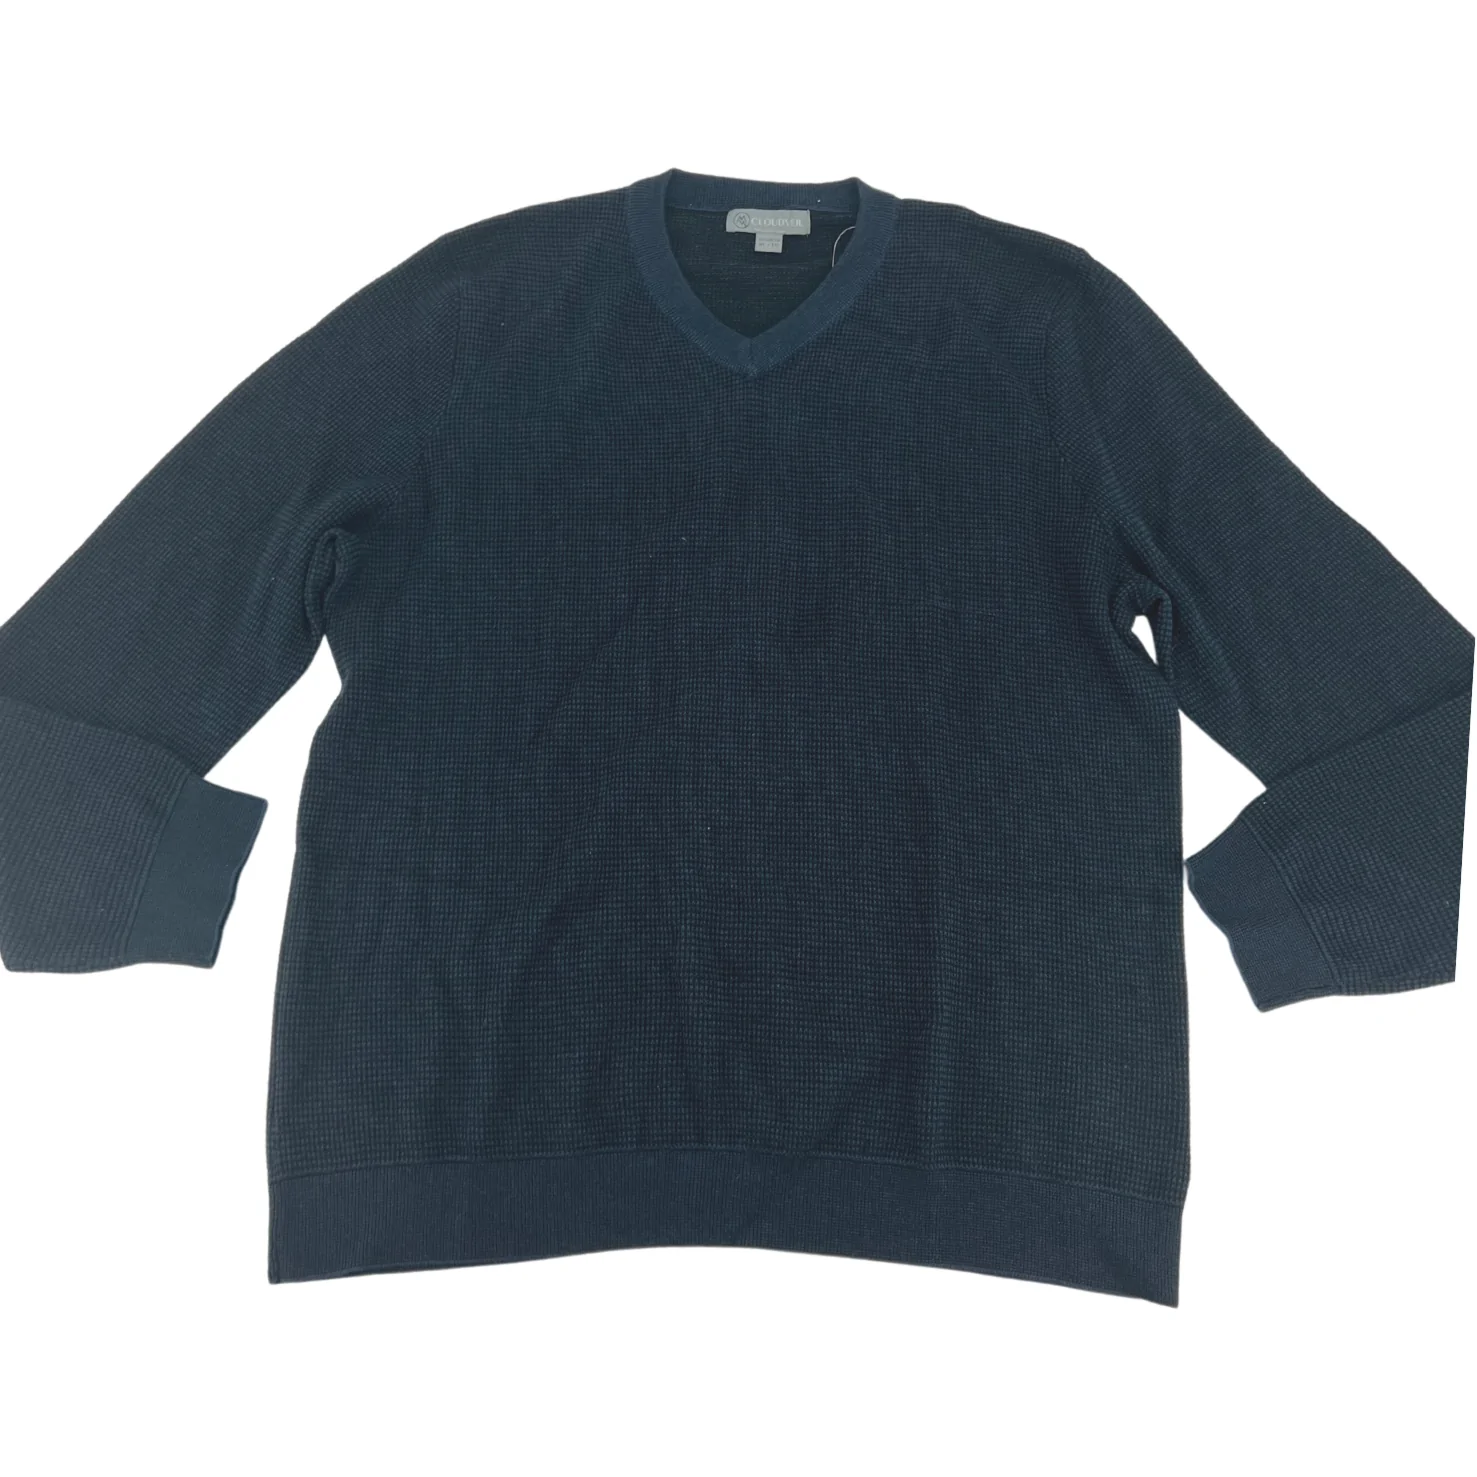 Cloudveil Men's Sweater / Pullover Sweater / Blue & Black / Size XLarge